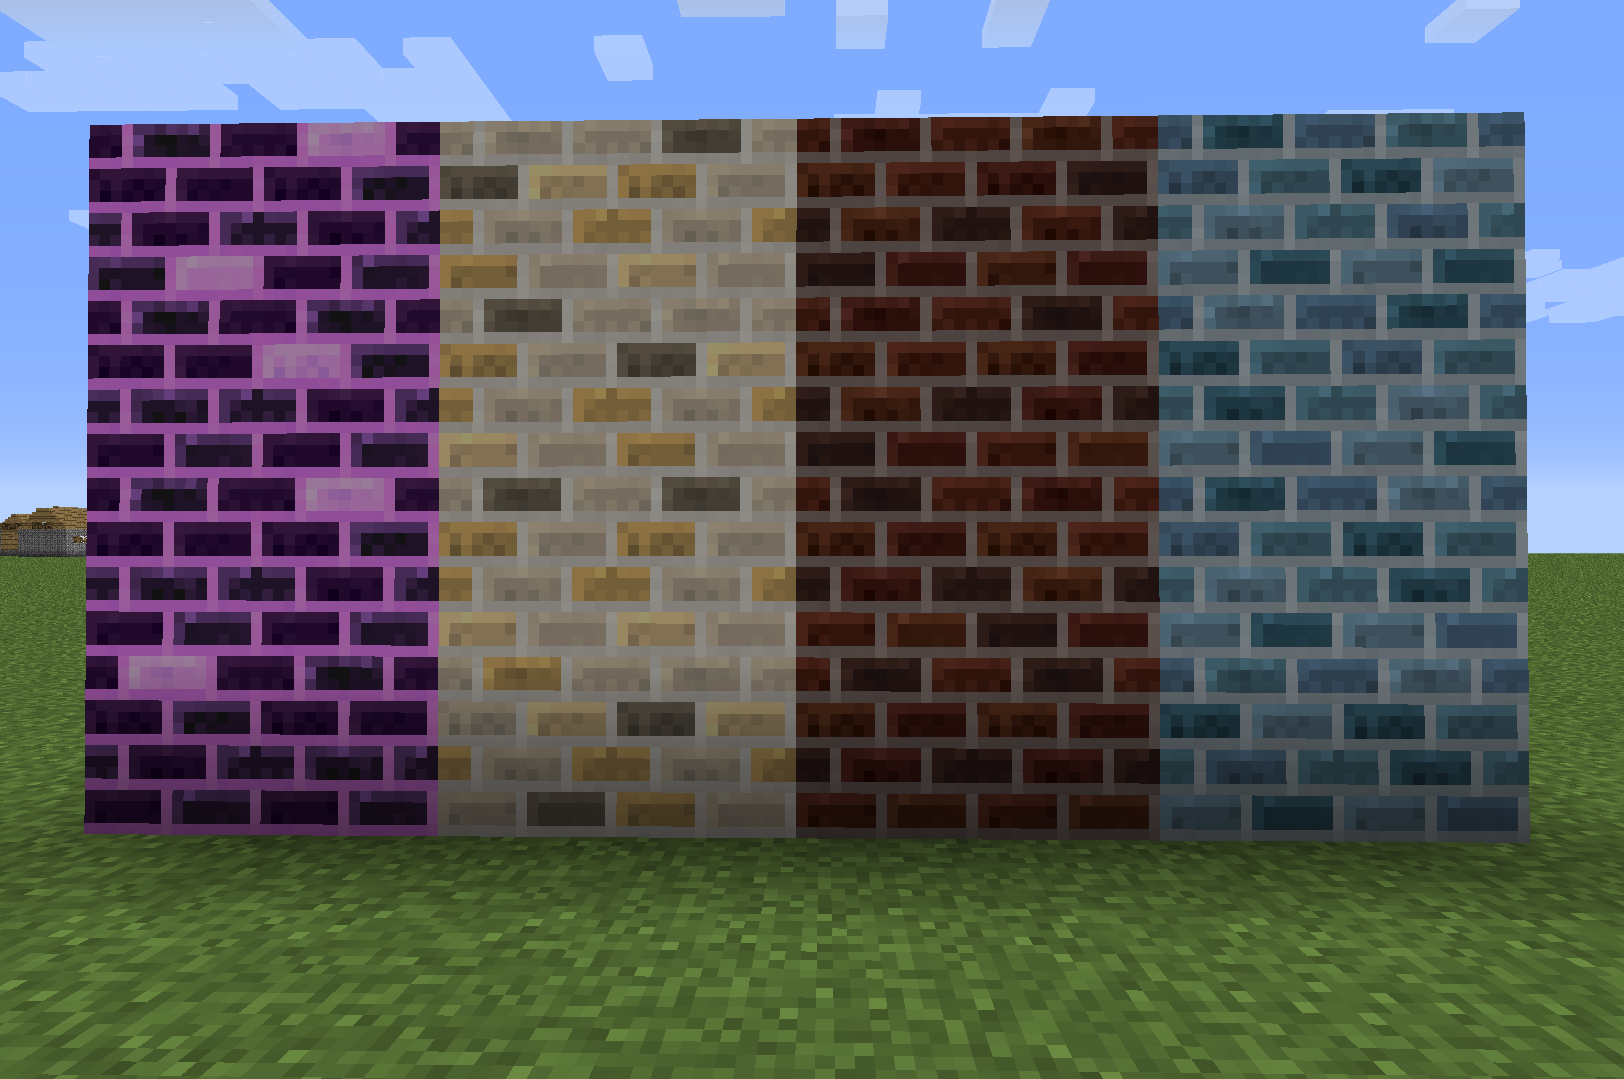 Additional bricks